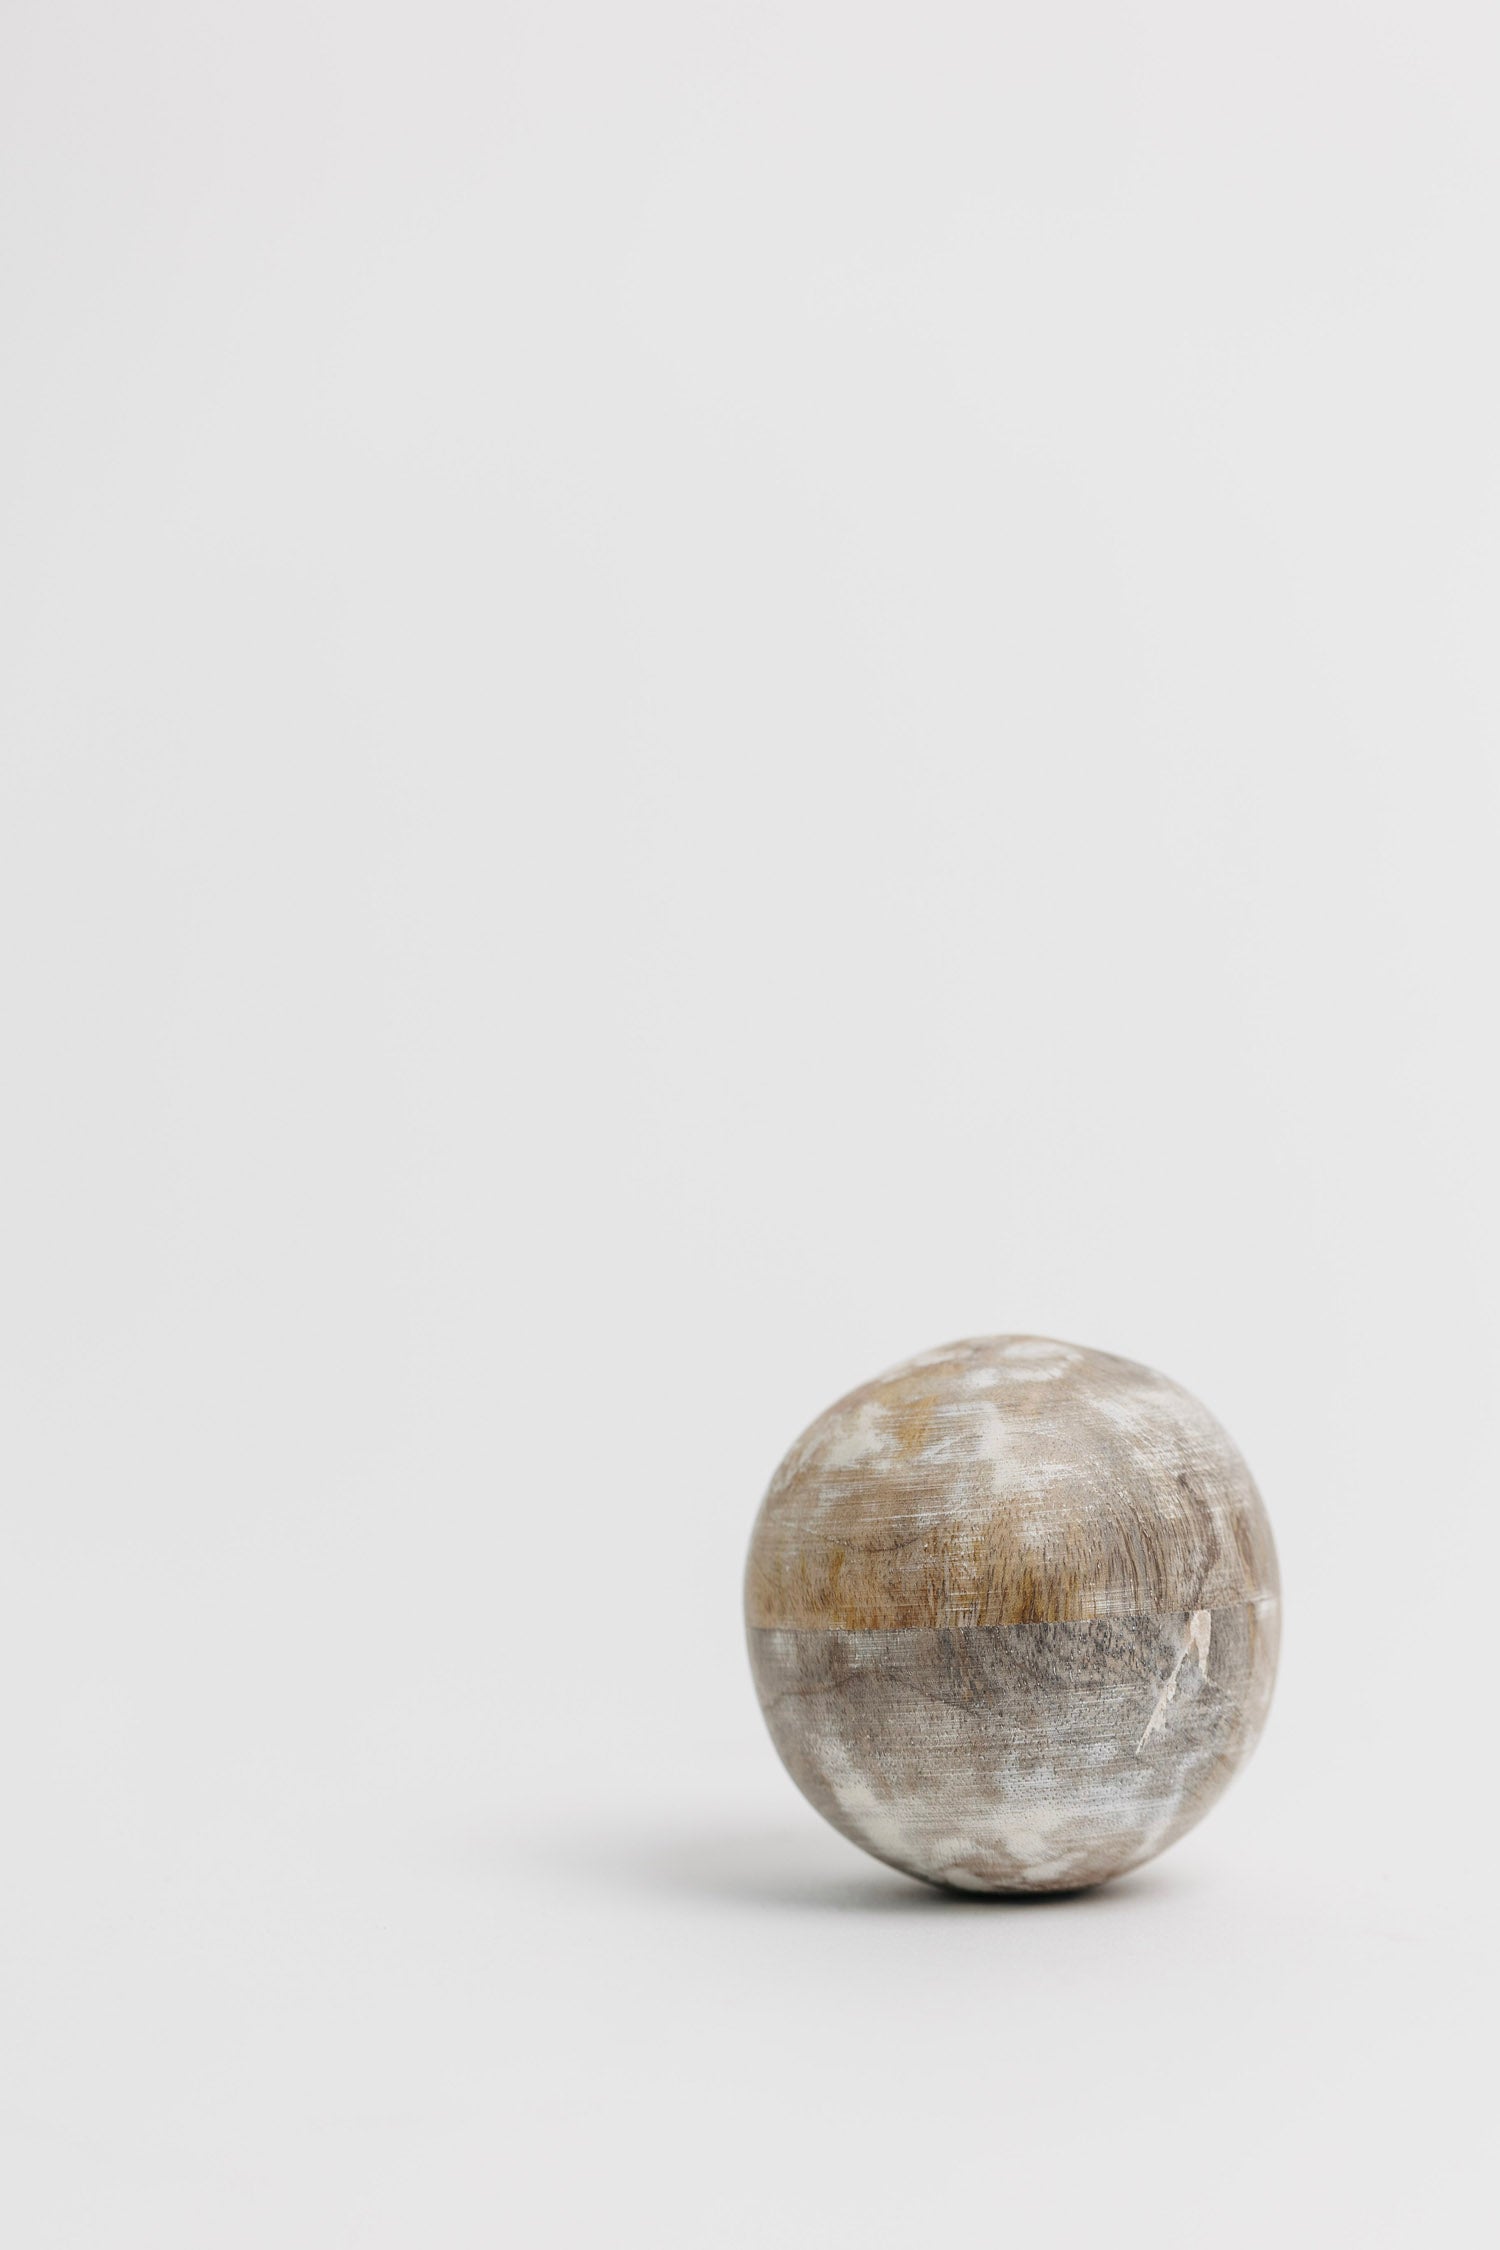 Kempton Wood Ball - 2 Sizes